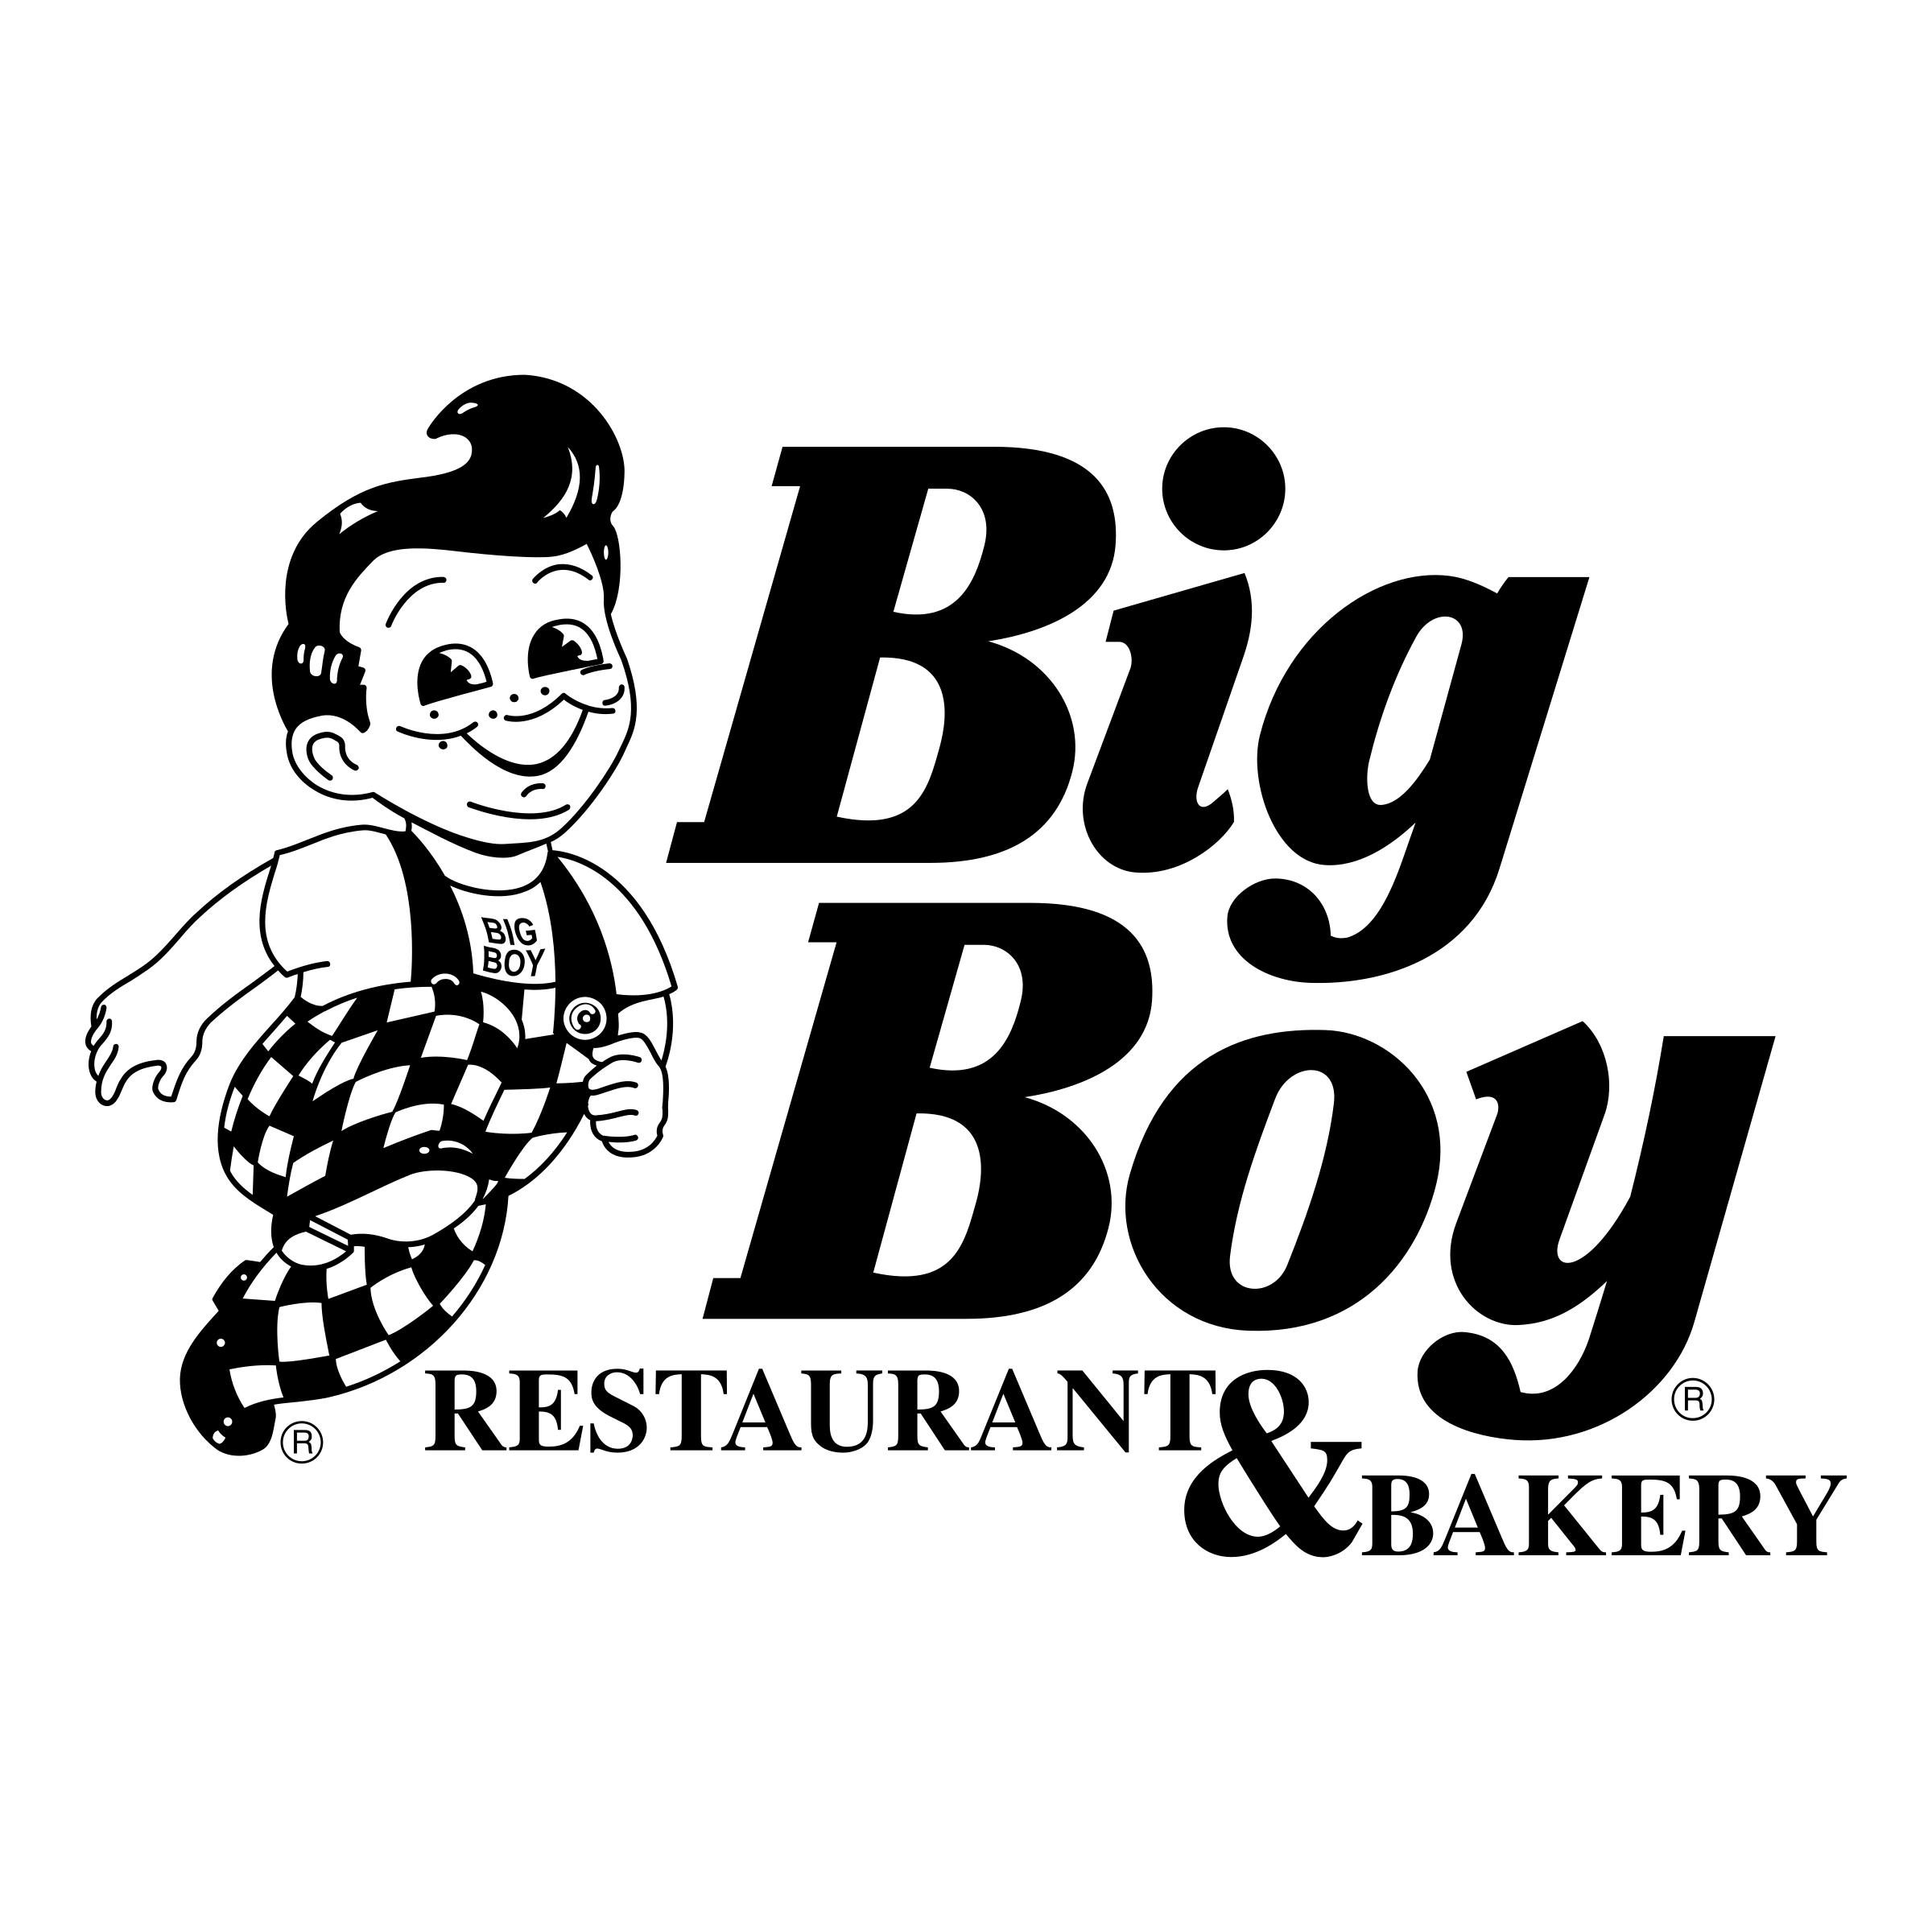 Boy Logo - Big Boy Logo PNG Transparent & SVG Vector - Freebie Supply